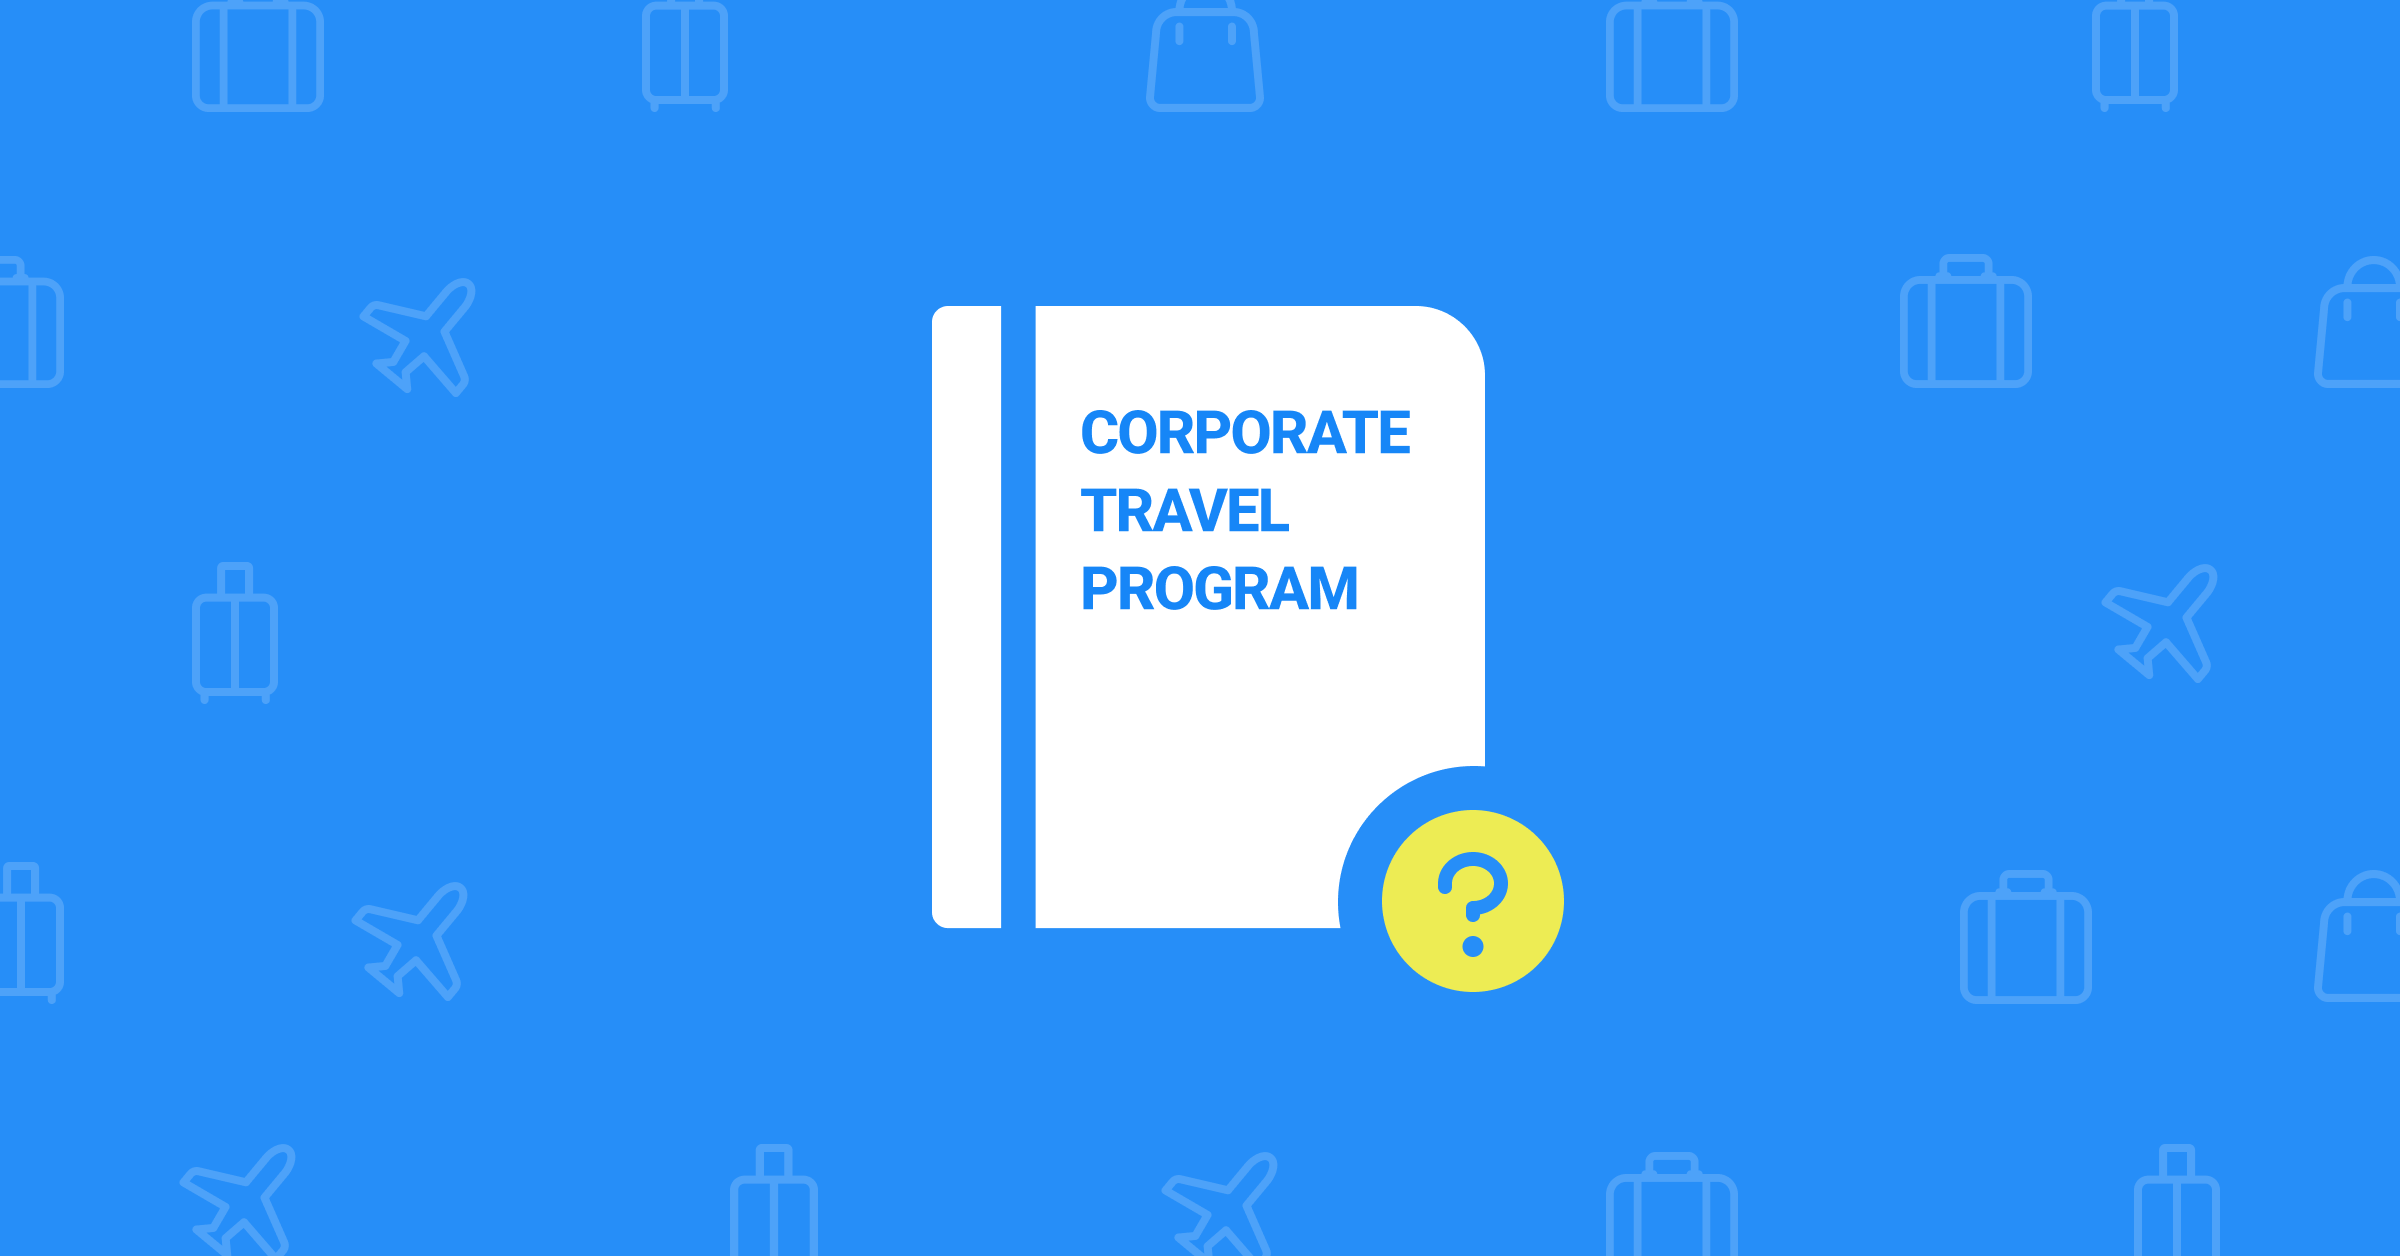 Corporate Travel Program Definition - WegoPro